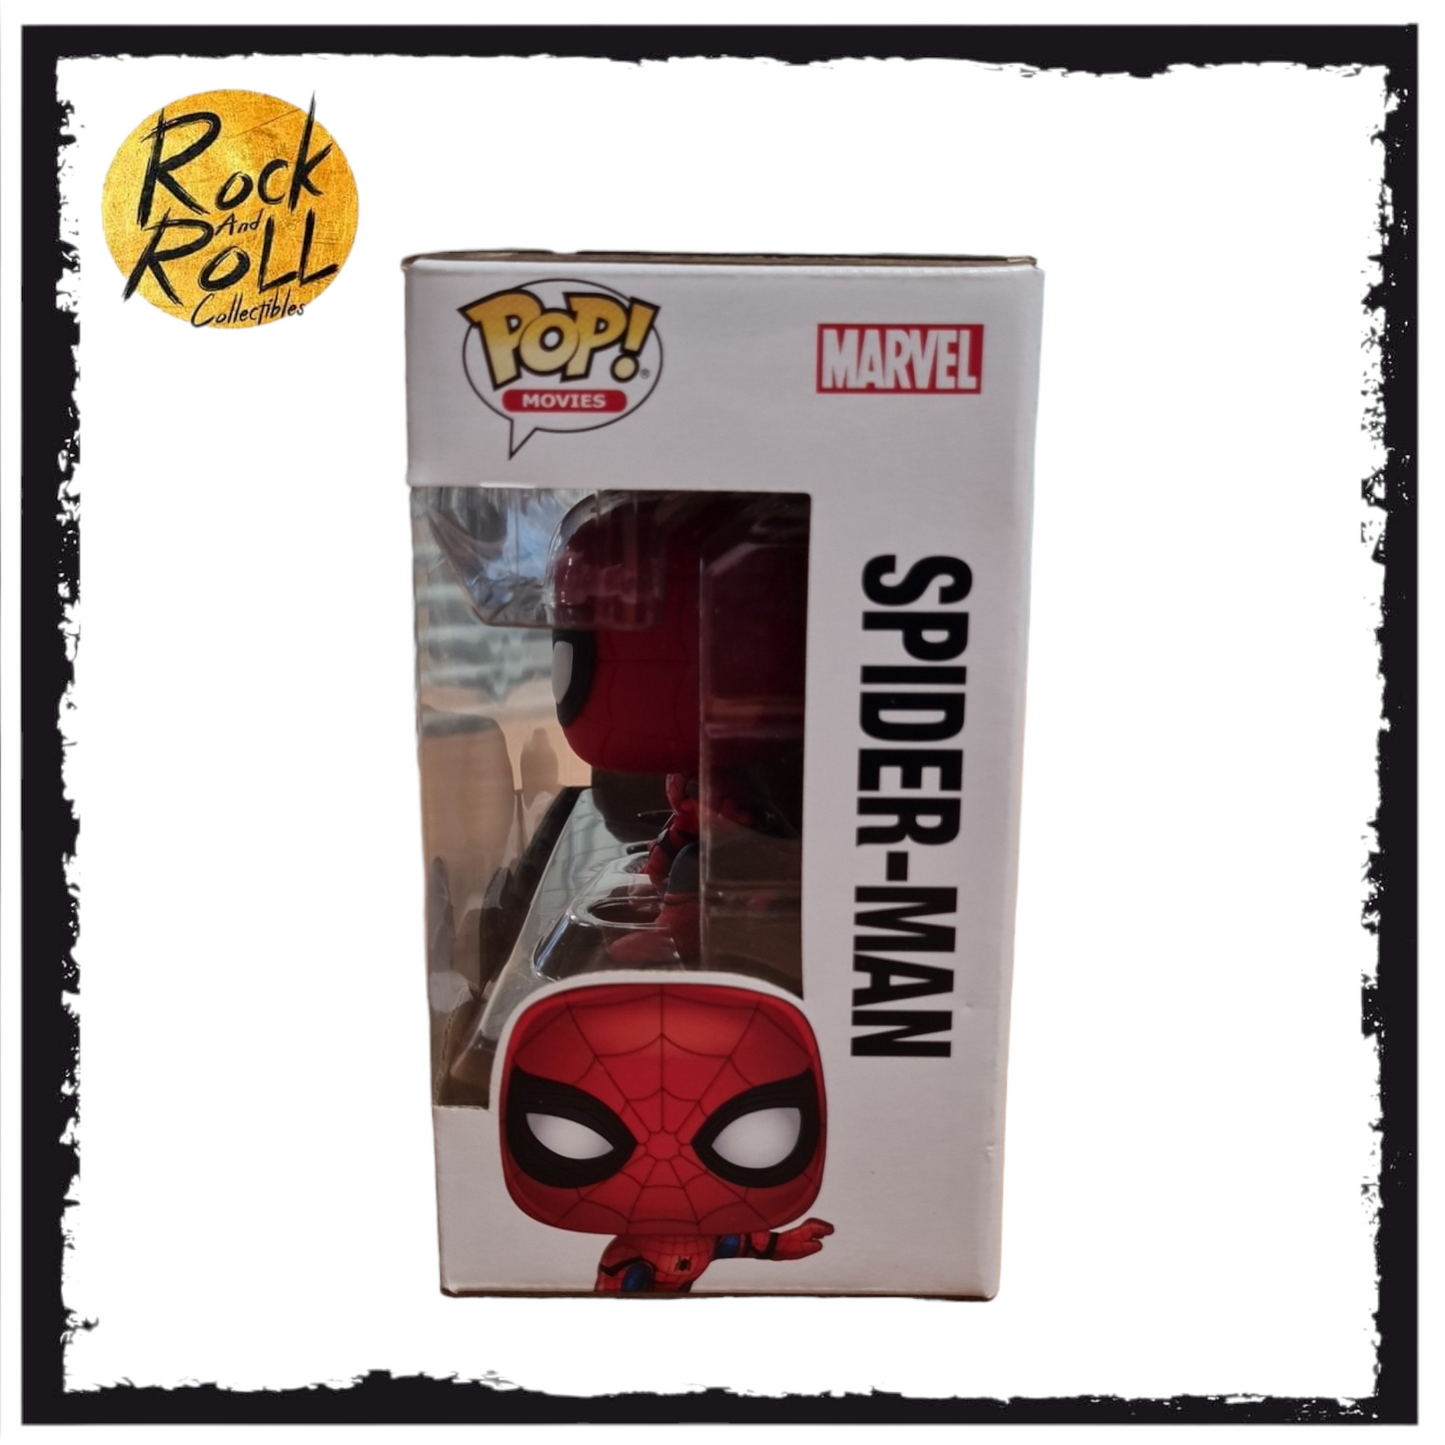 Spider-man Homecoming - Iron Man / Spider-Man Funko Pop! 2 Pack - Exclusive